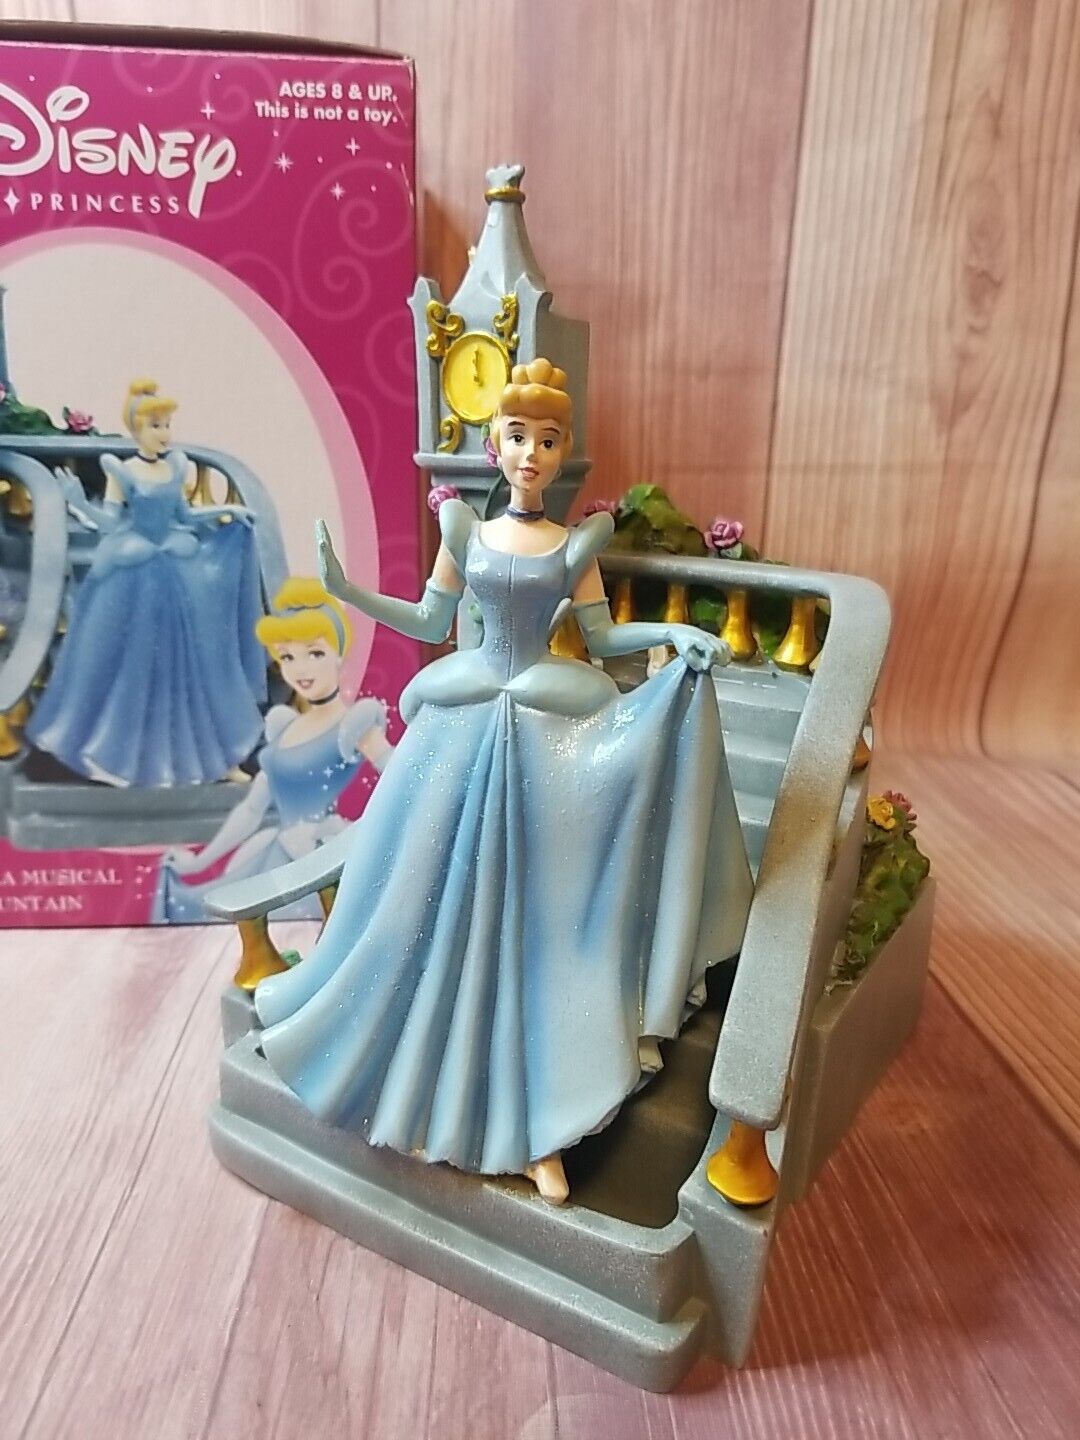 Disney Princess Cinderella Musical Water Fountain - So This Is Love.